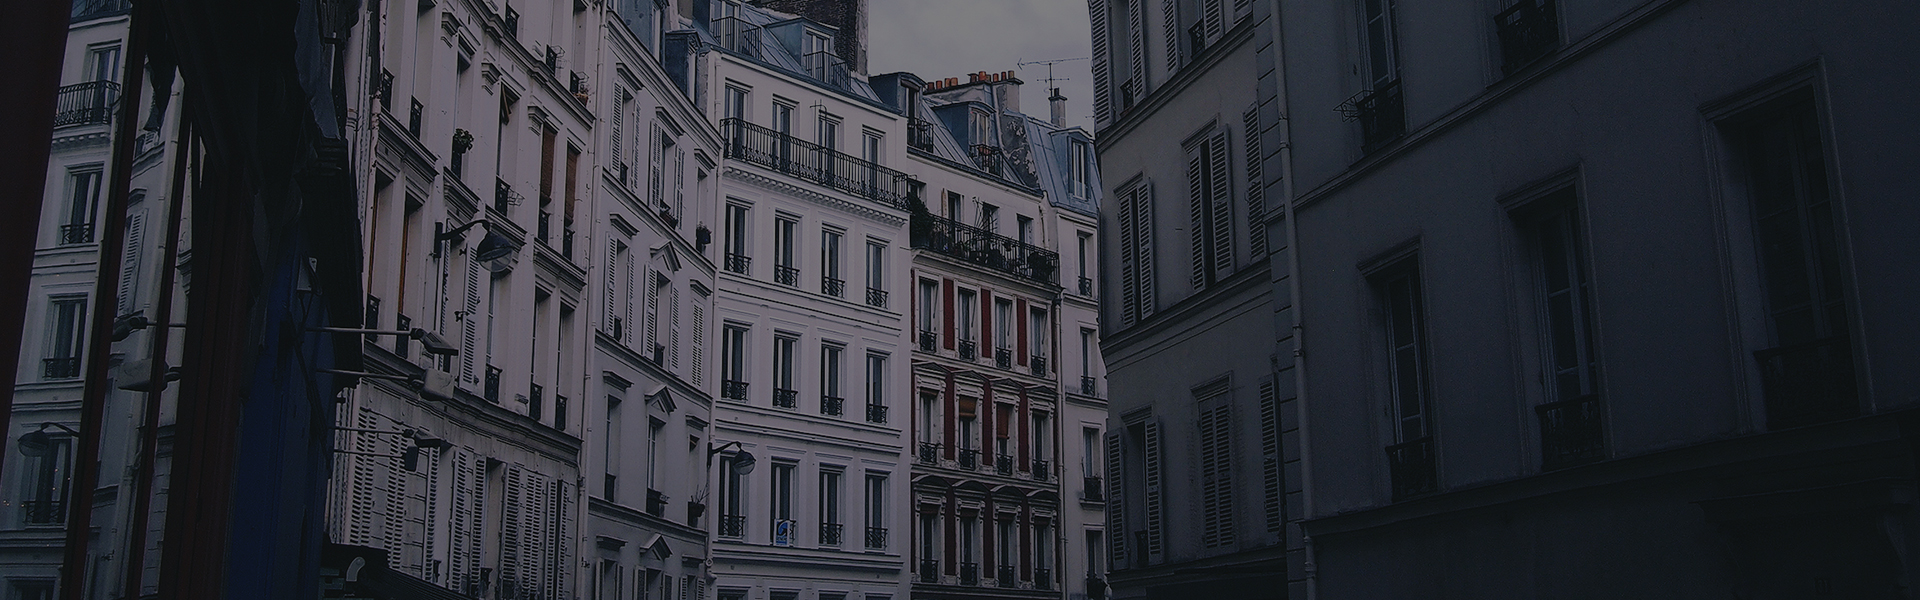 Appart Hotel Saint Germain